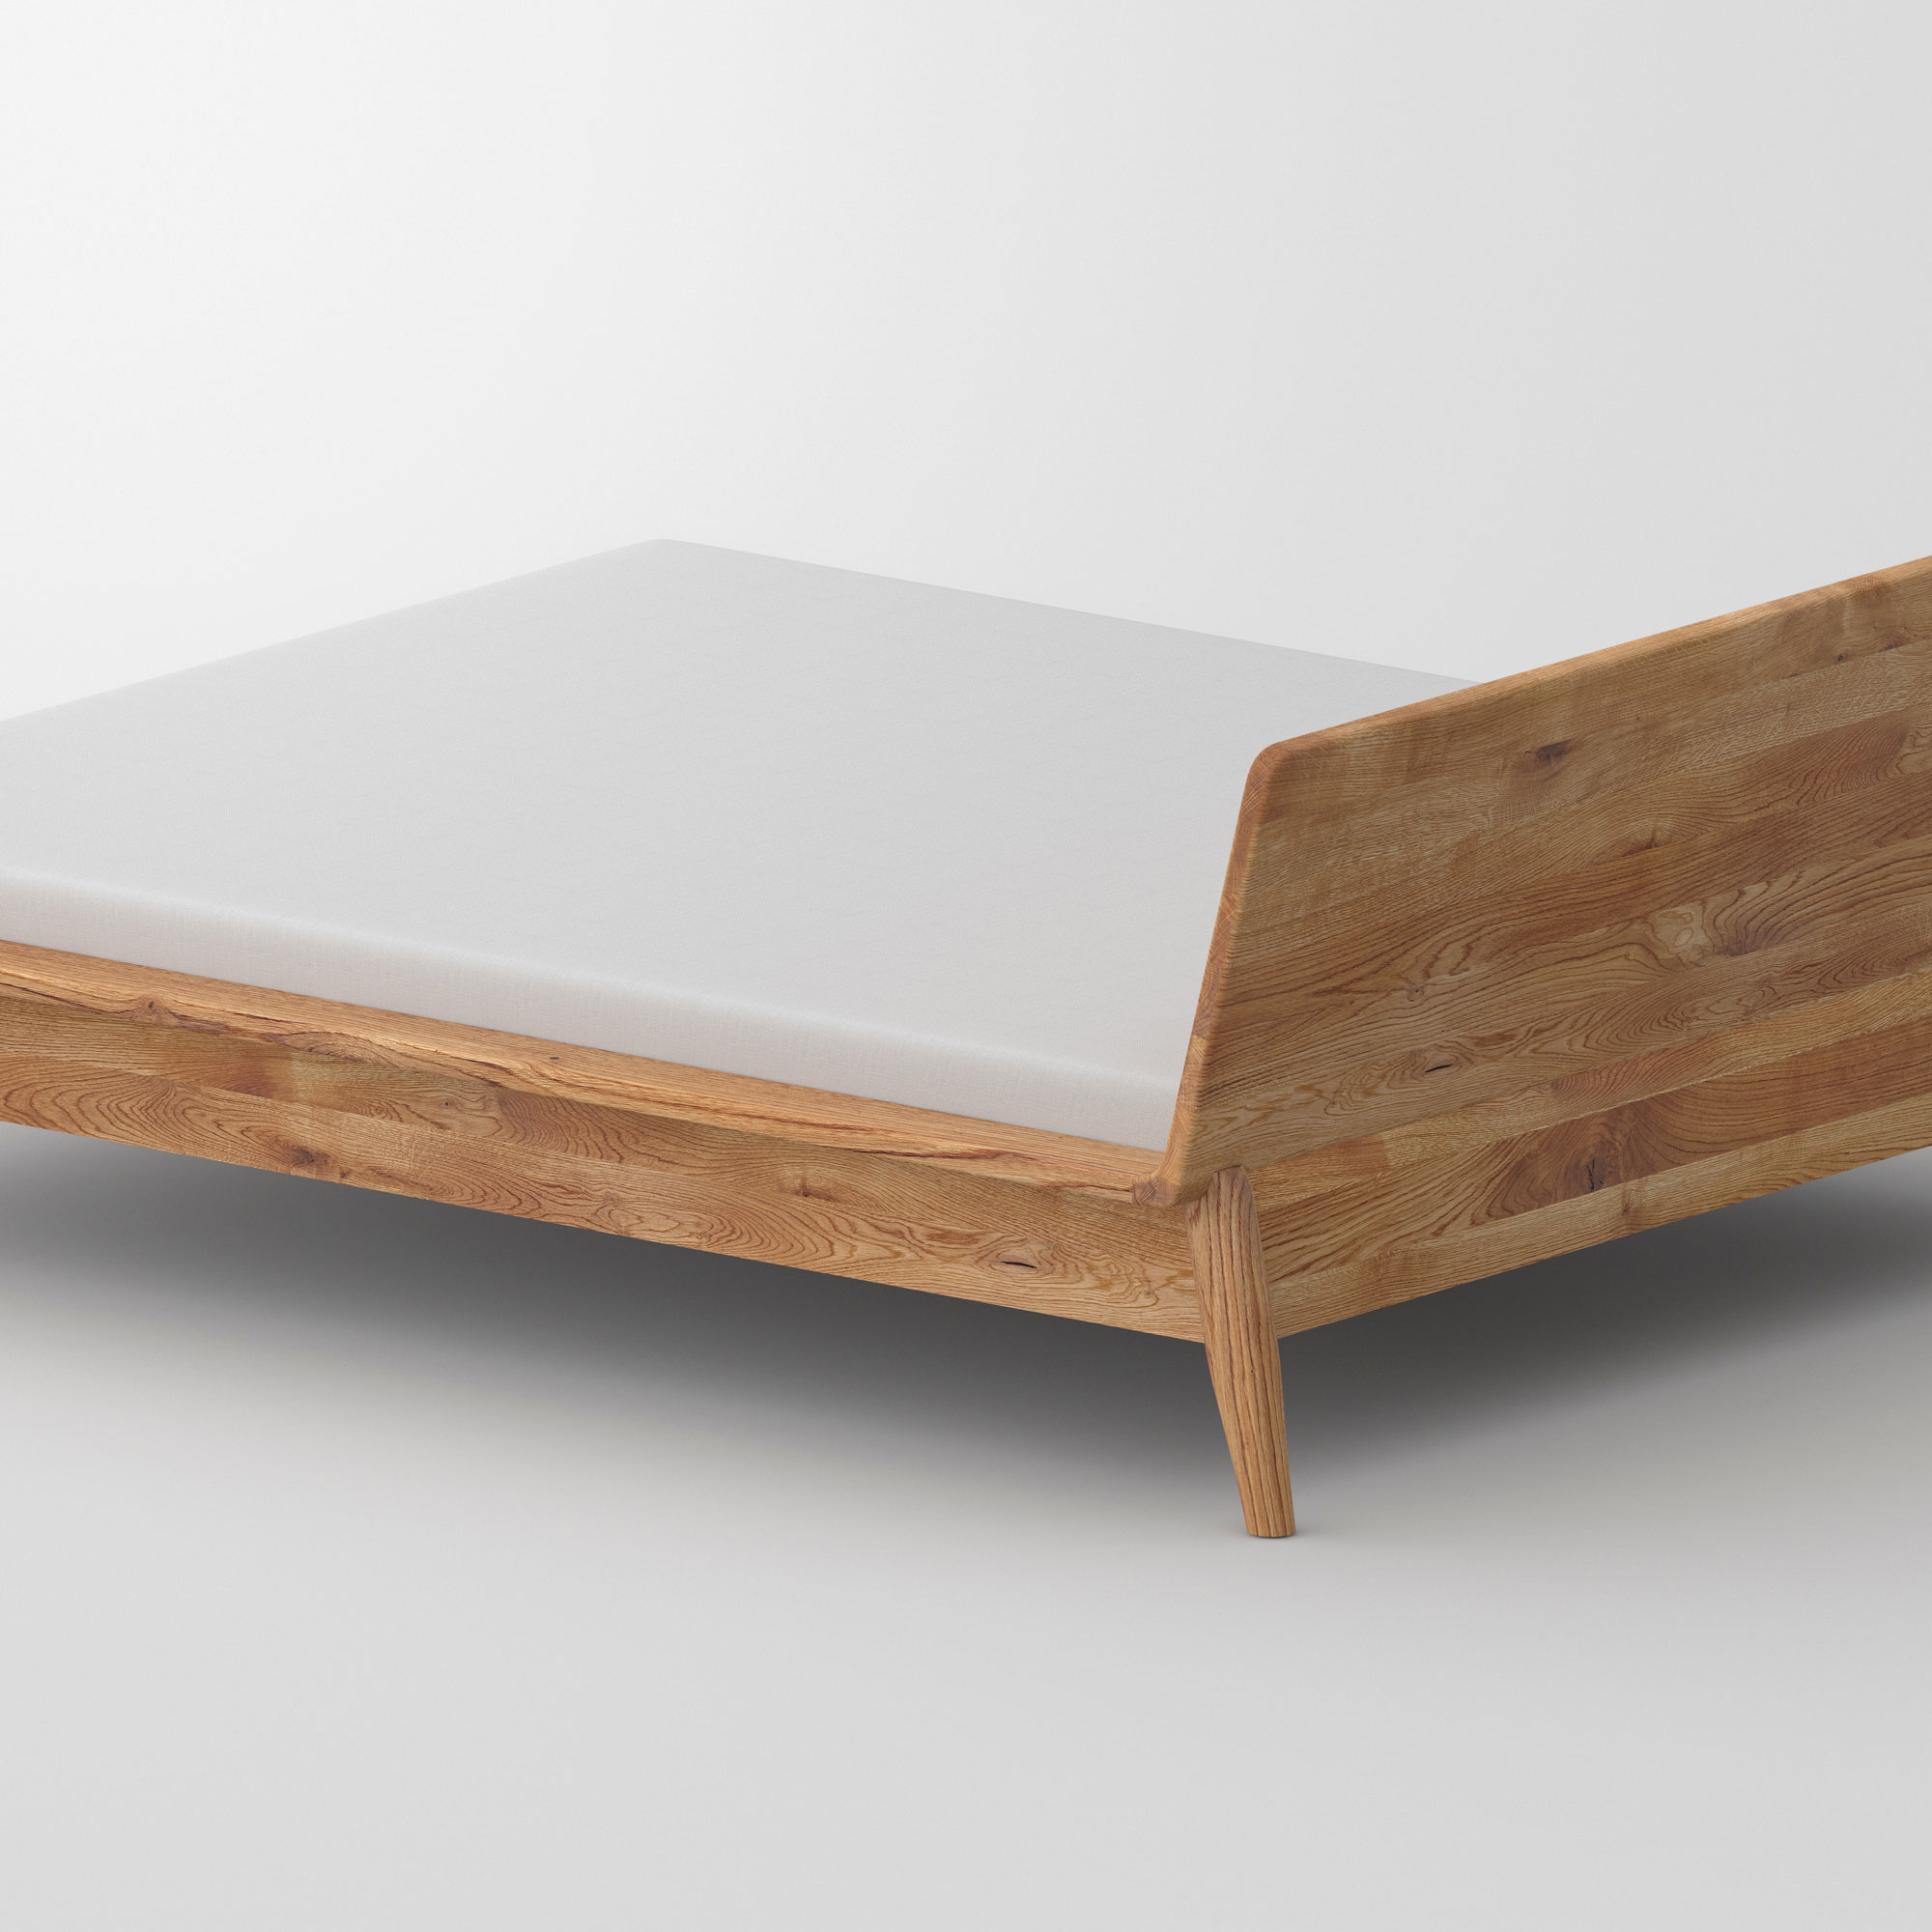 Designer Bed AETAS cam4 custom made in solid wood by vitamin design